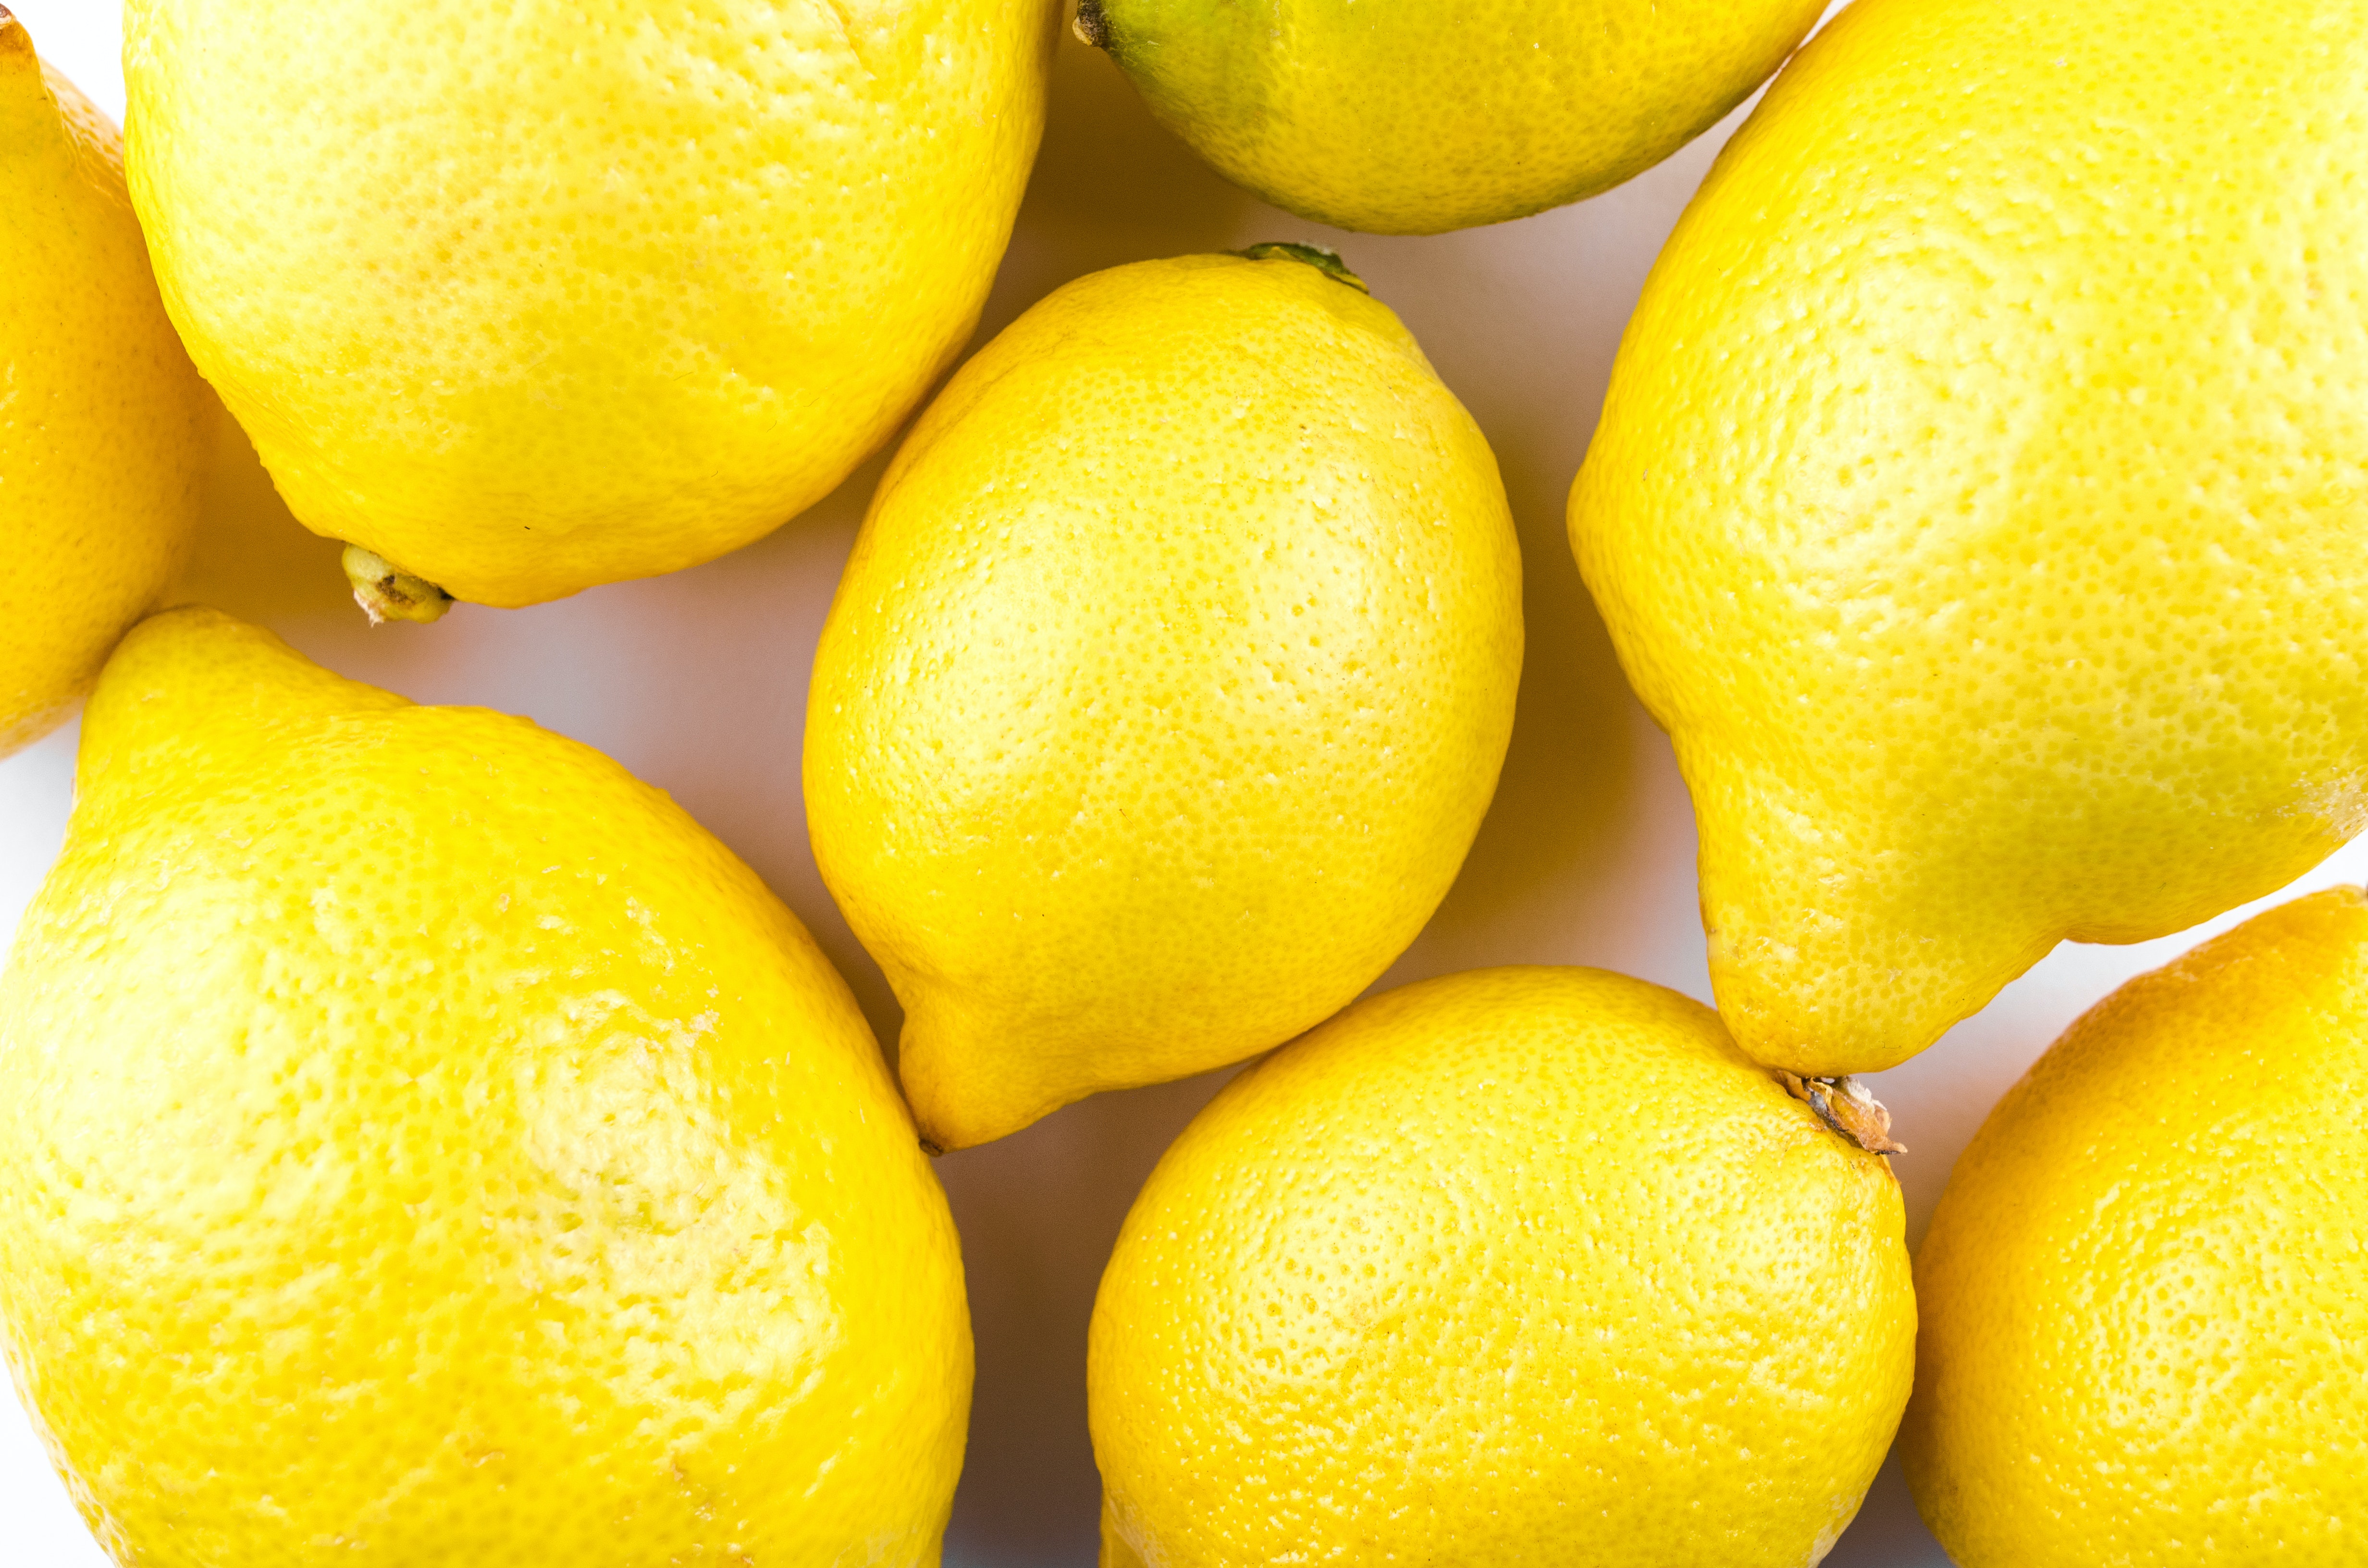 Lemons photos download the best free lemons stock photos hd images